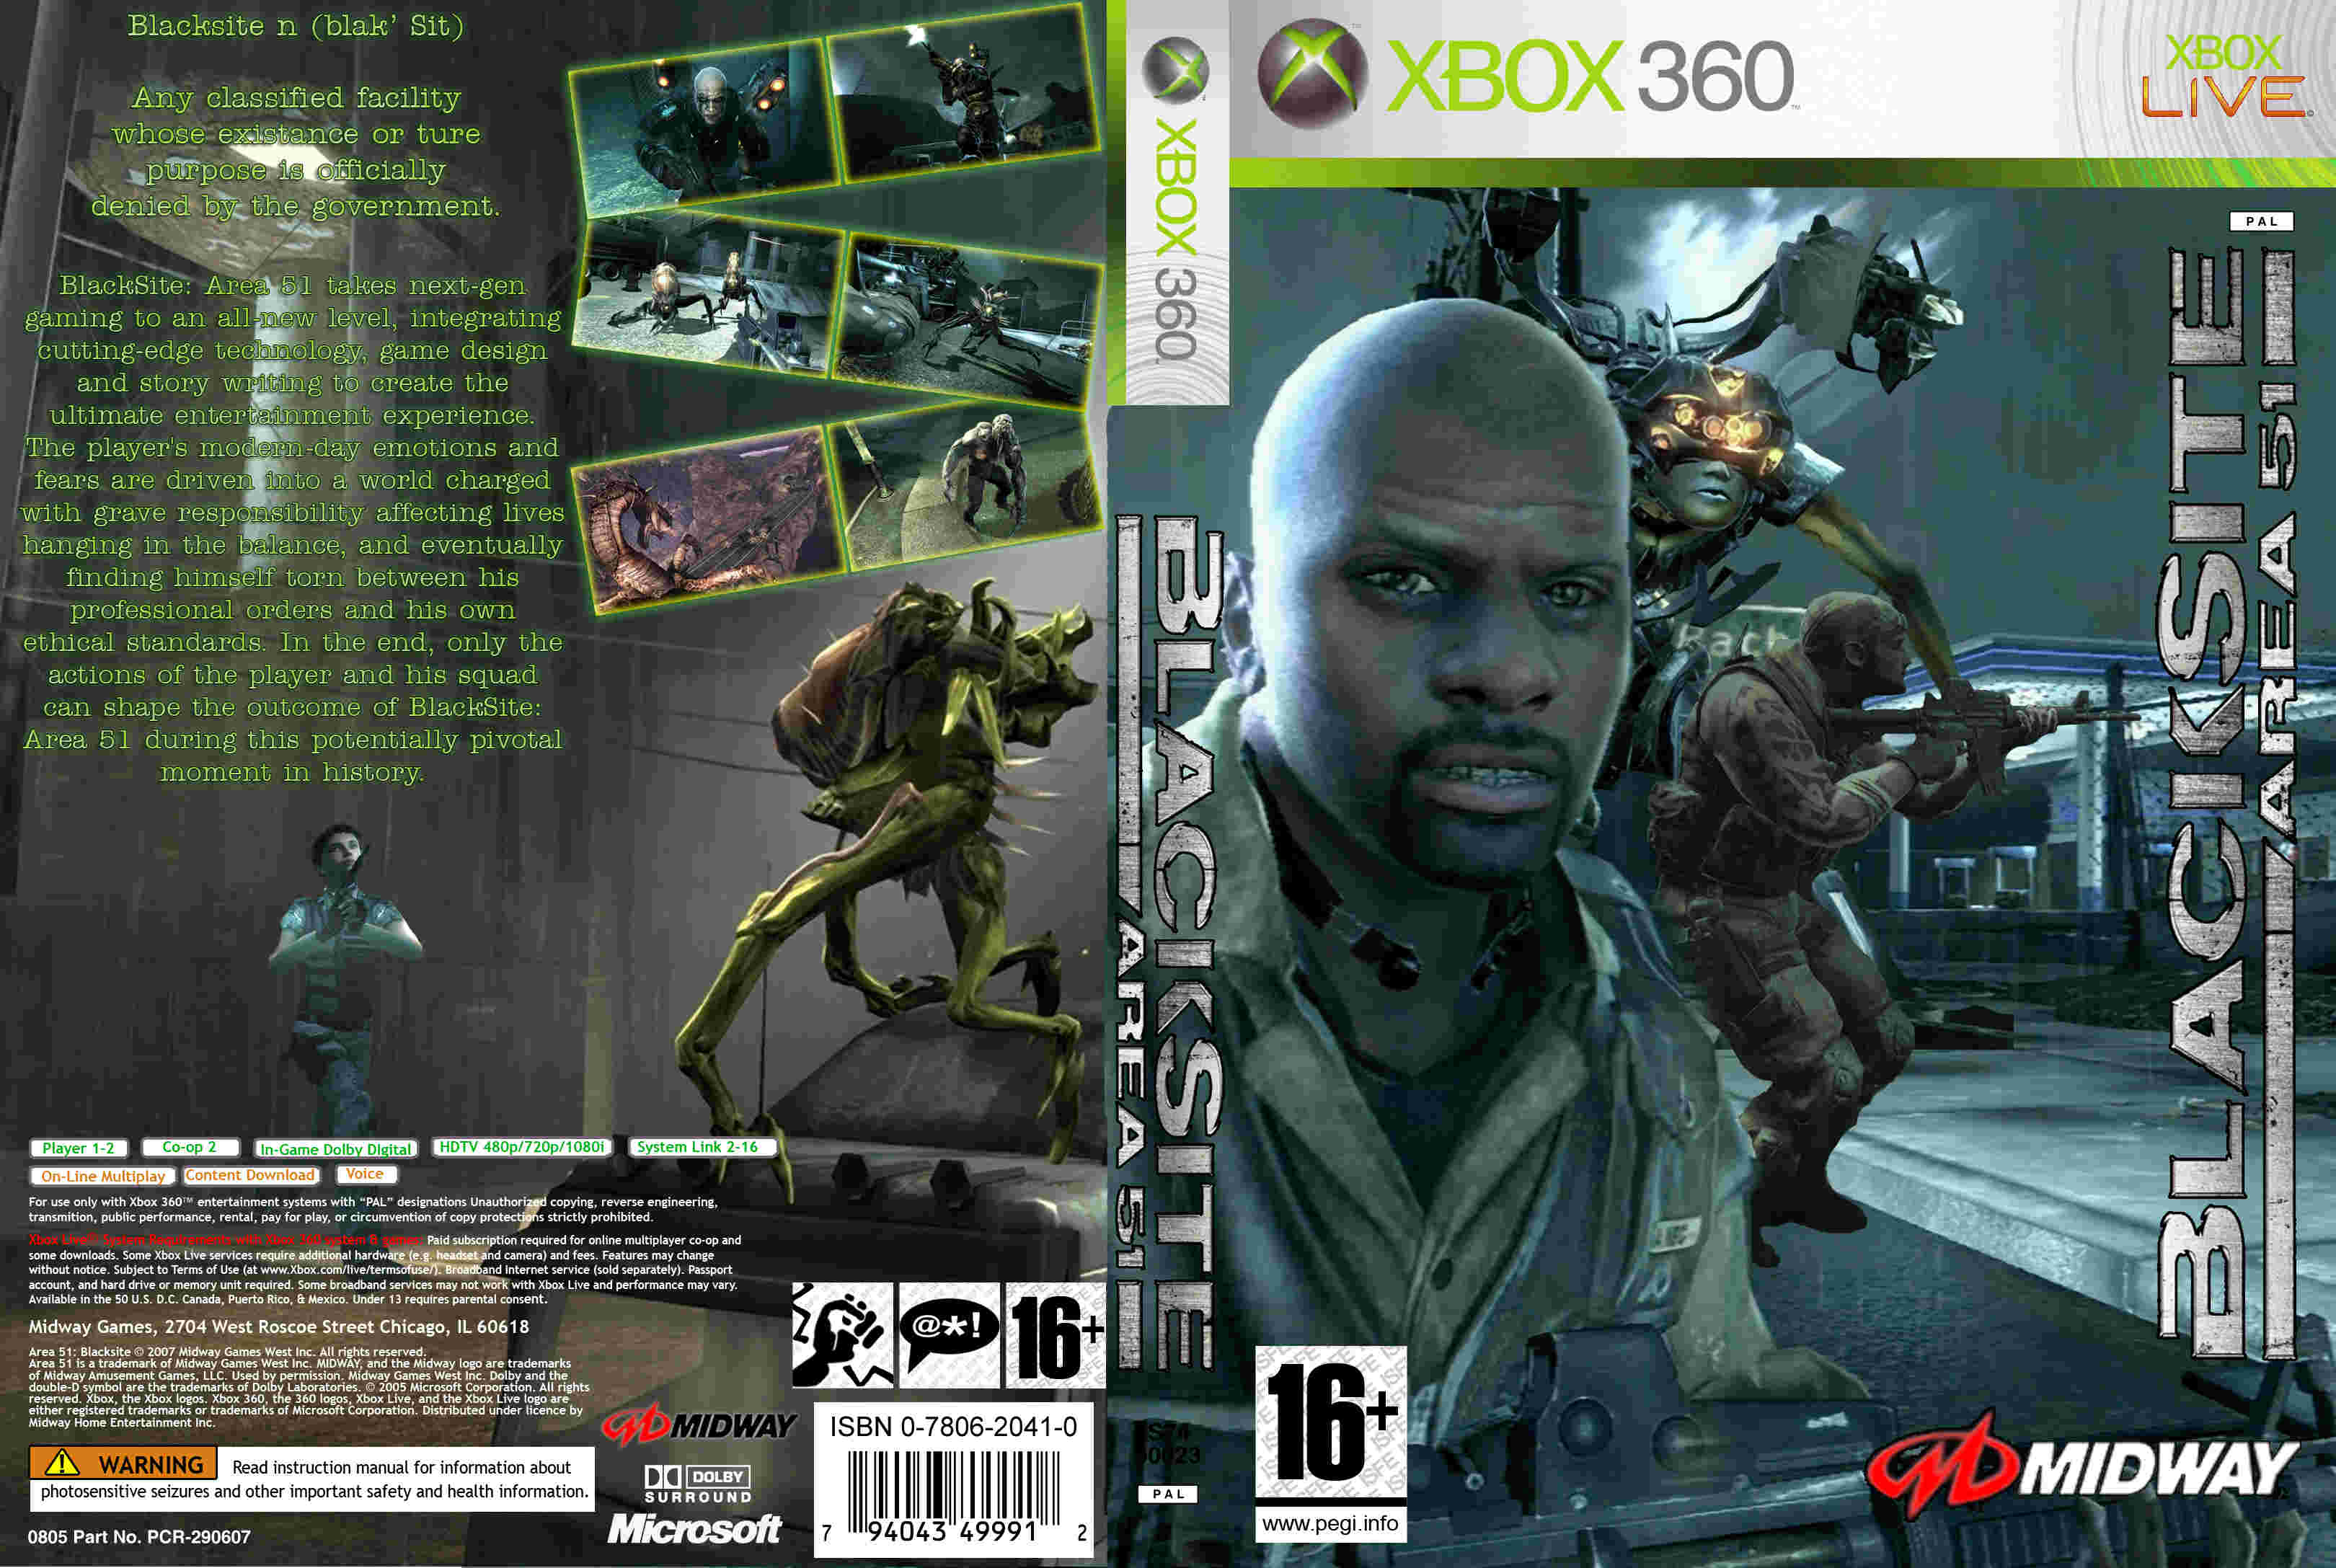 BlackSite Area 51 PC DVD shooter game